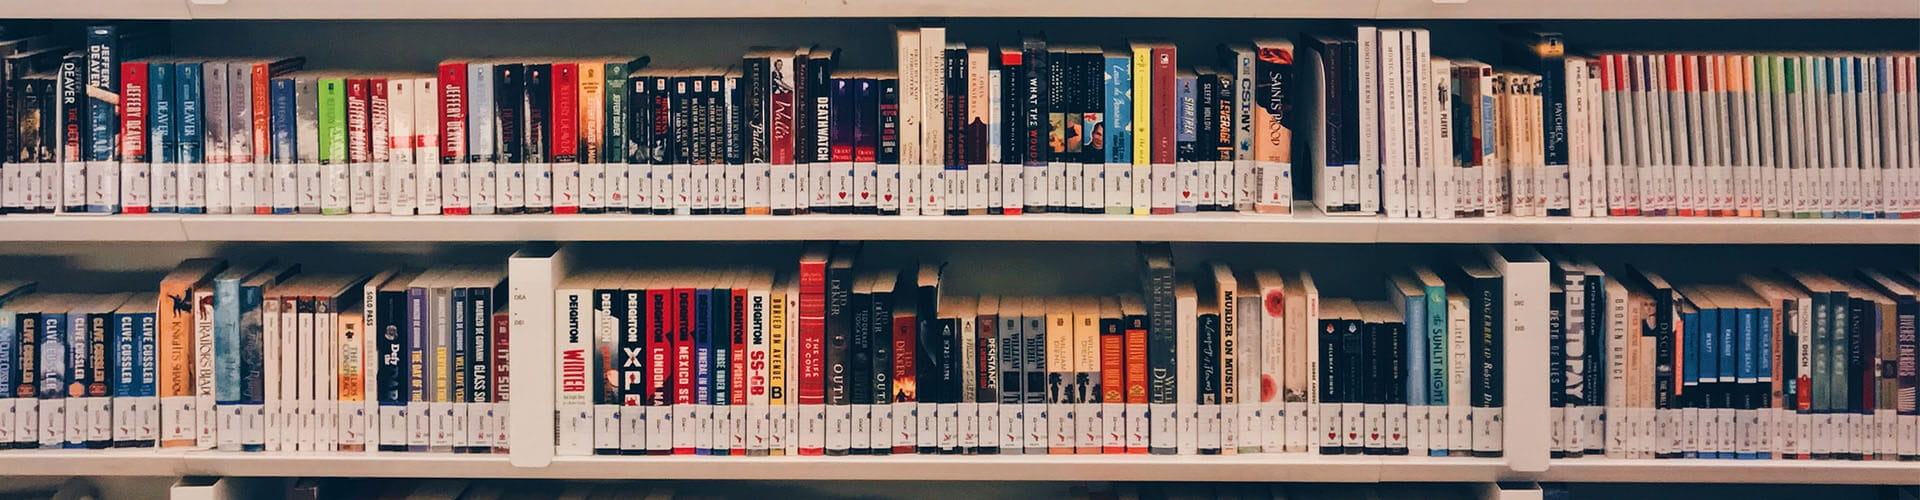 library books on a shelf